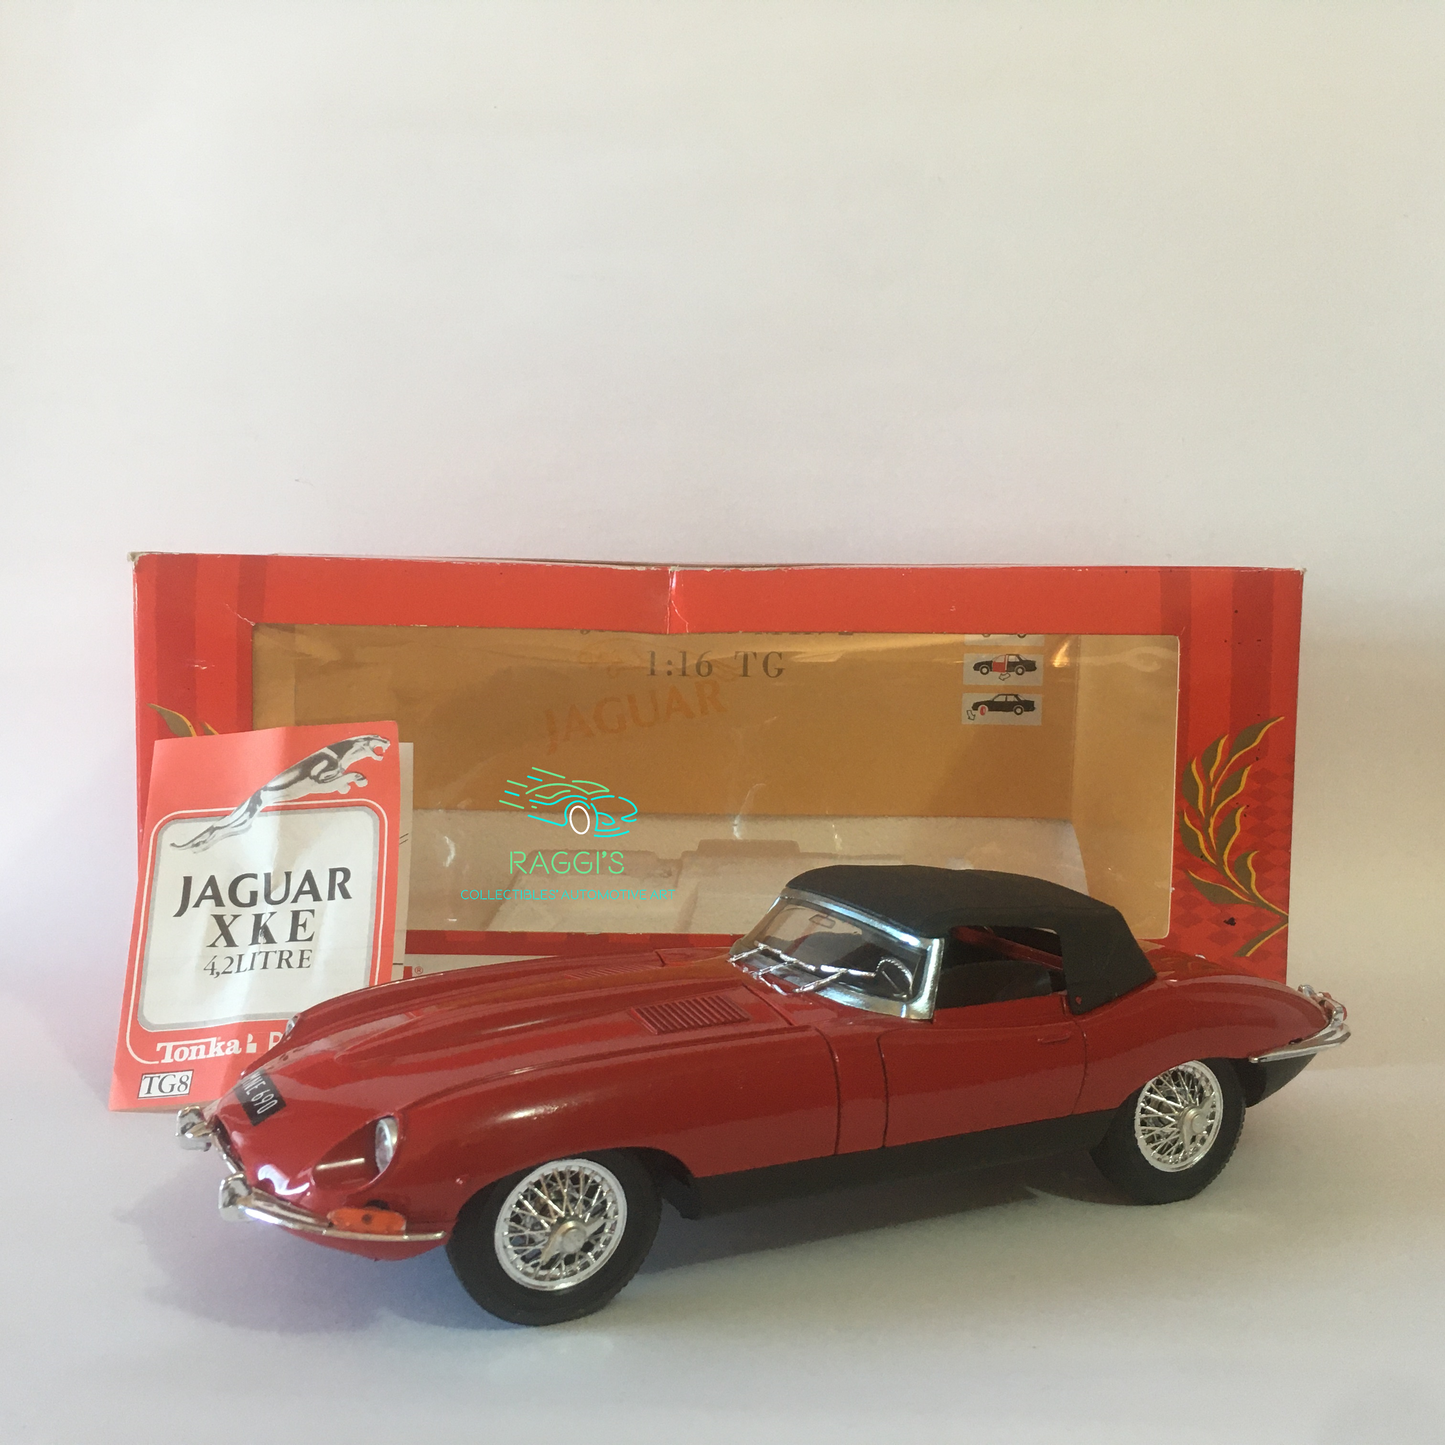 Jaguar, 1:16 Scale Diecast Metal Model Tonka Polistil Jaguar XKE 4.2 Liter with Original Box Year 1981